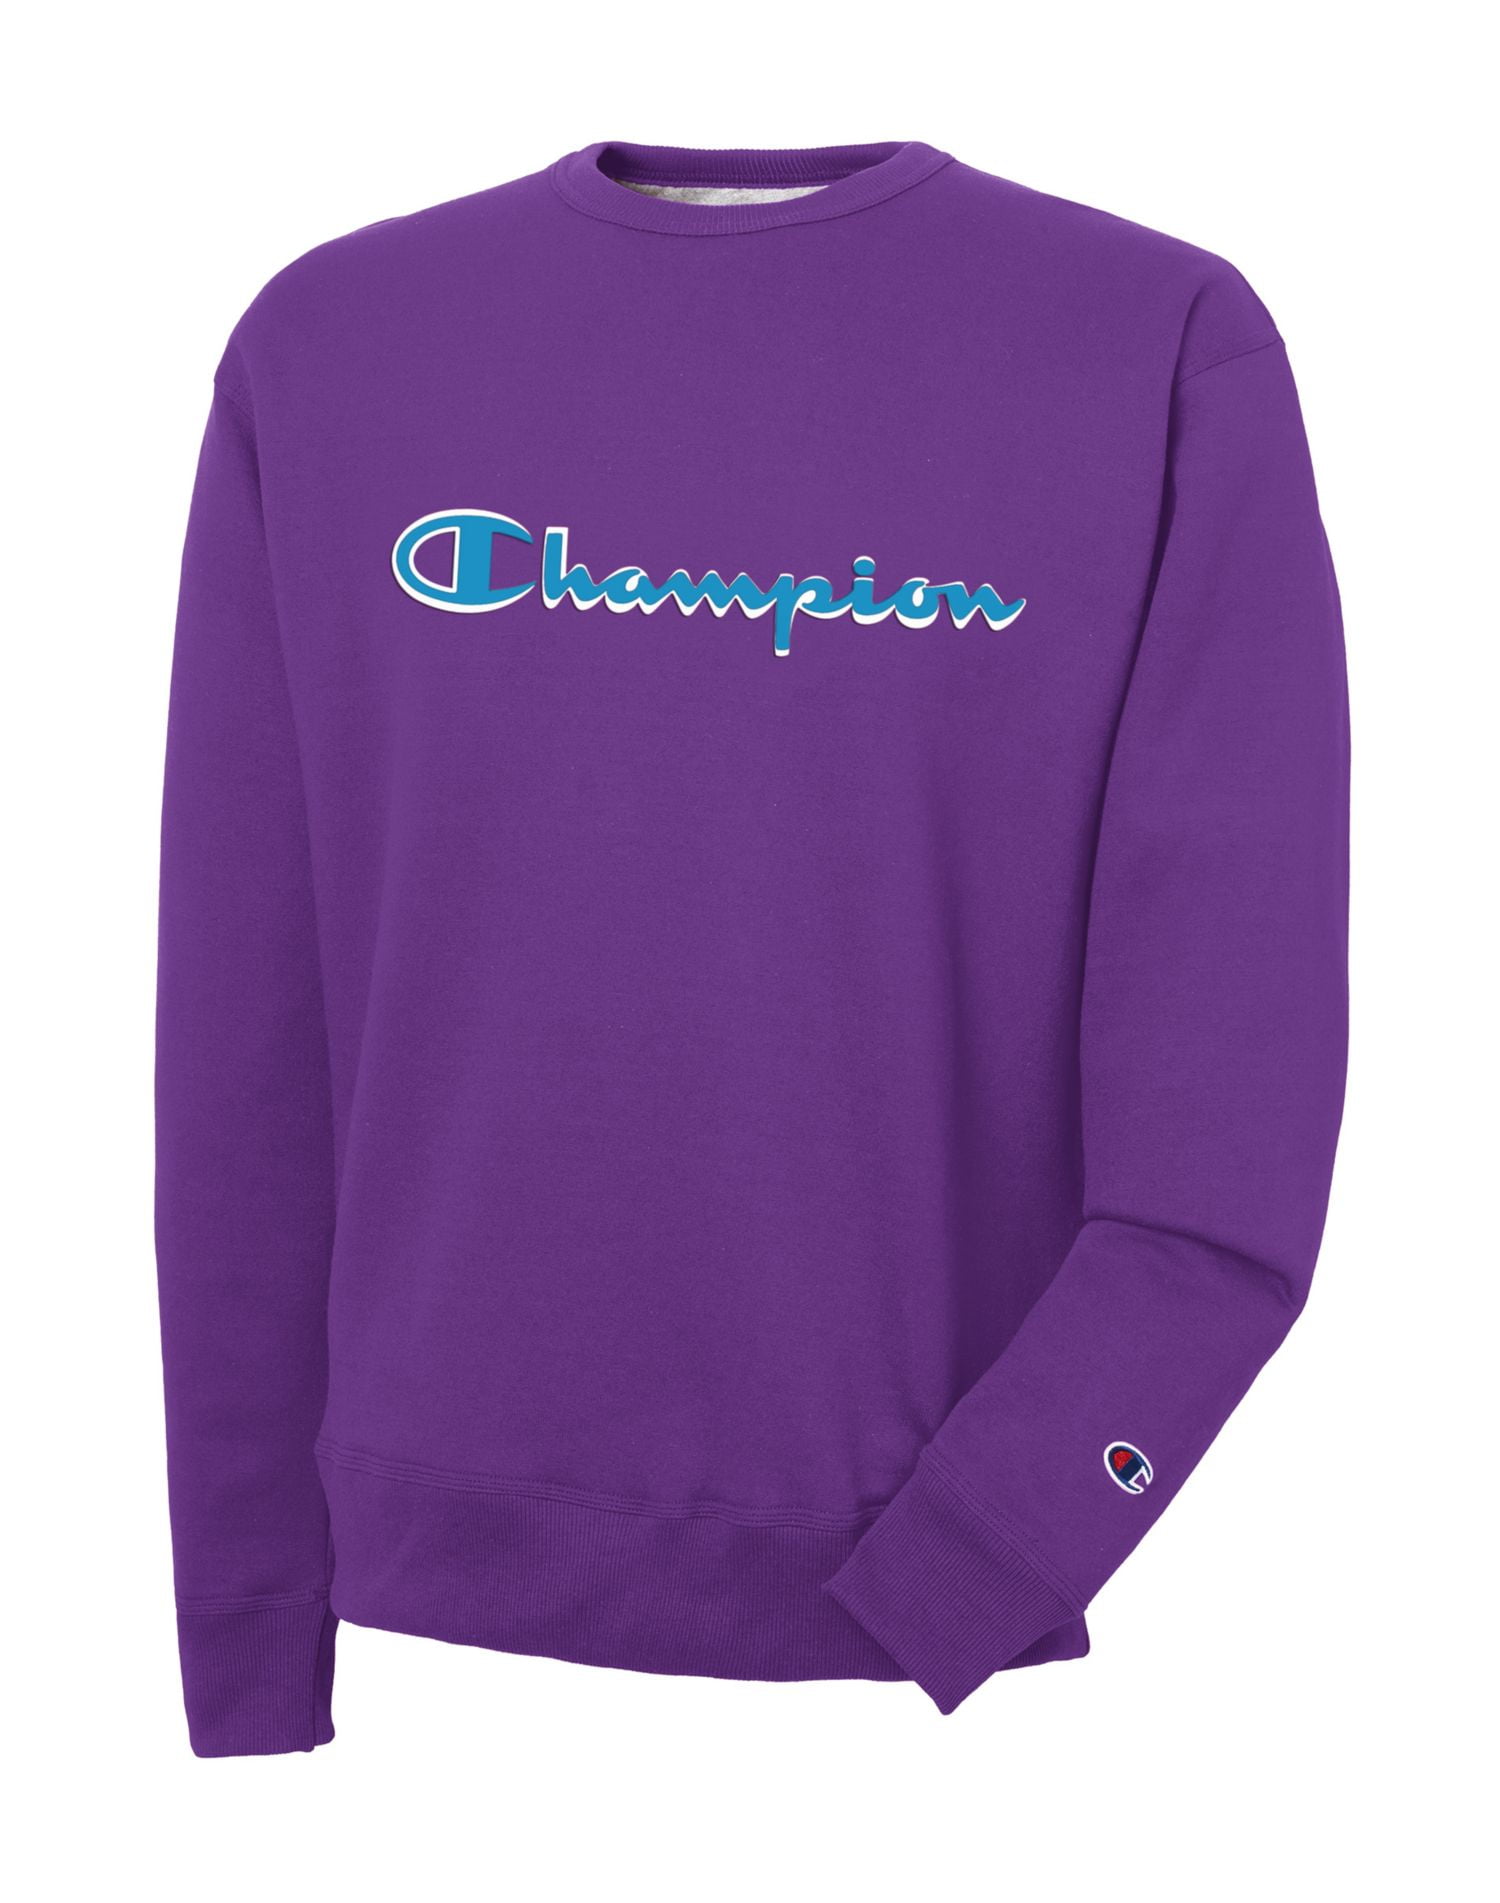 lavender champion hoodie mens